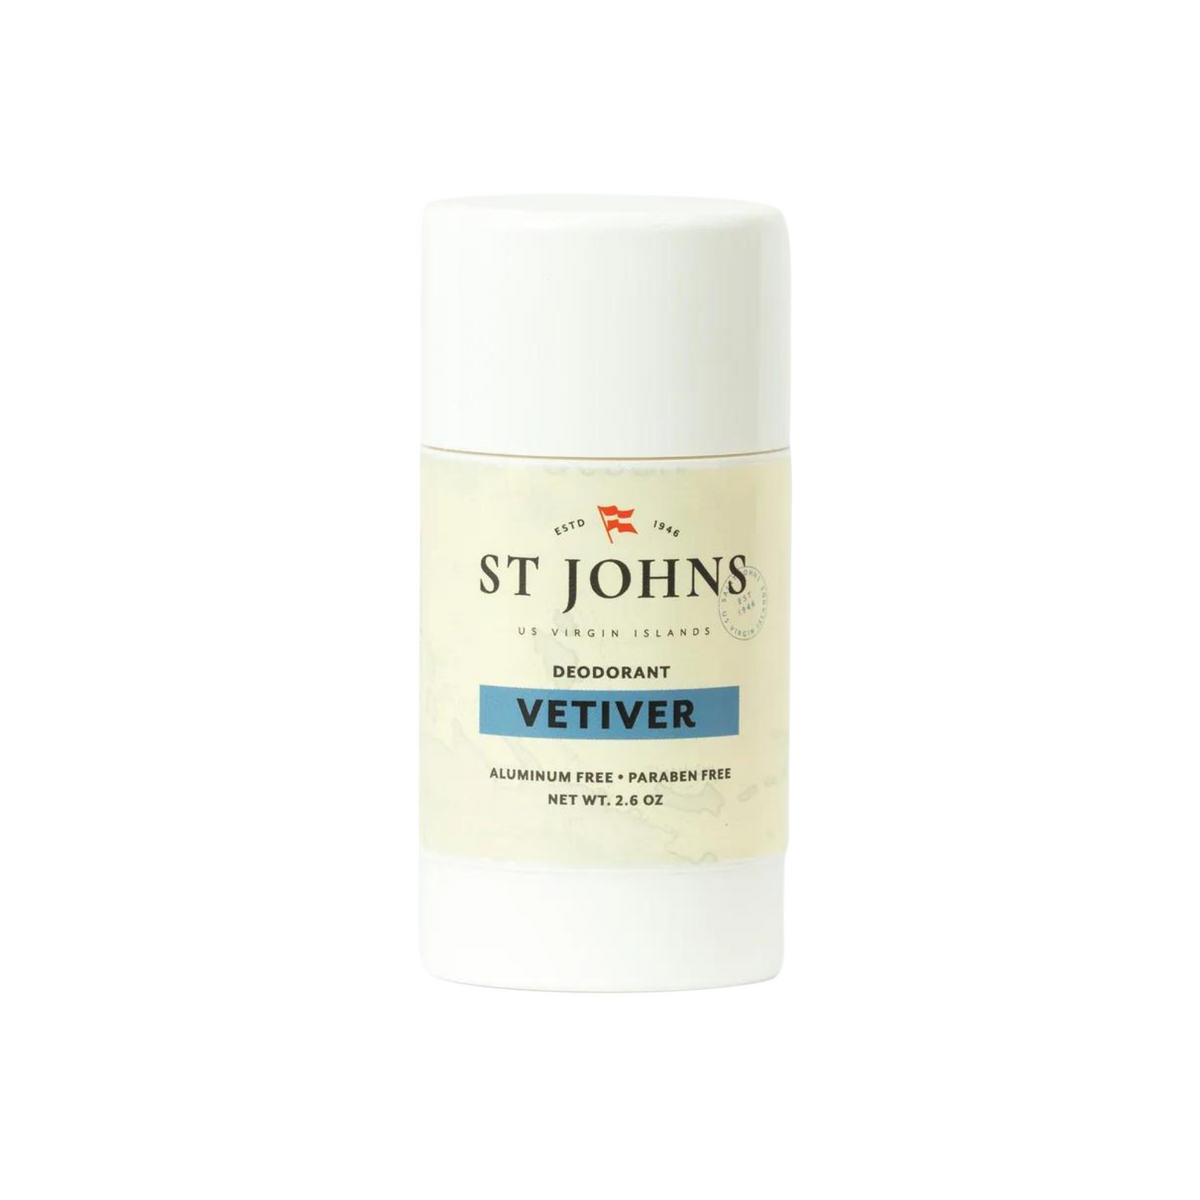 Primary Image of Vetiver Deodorant